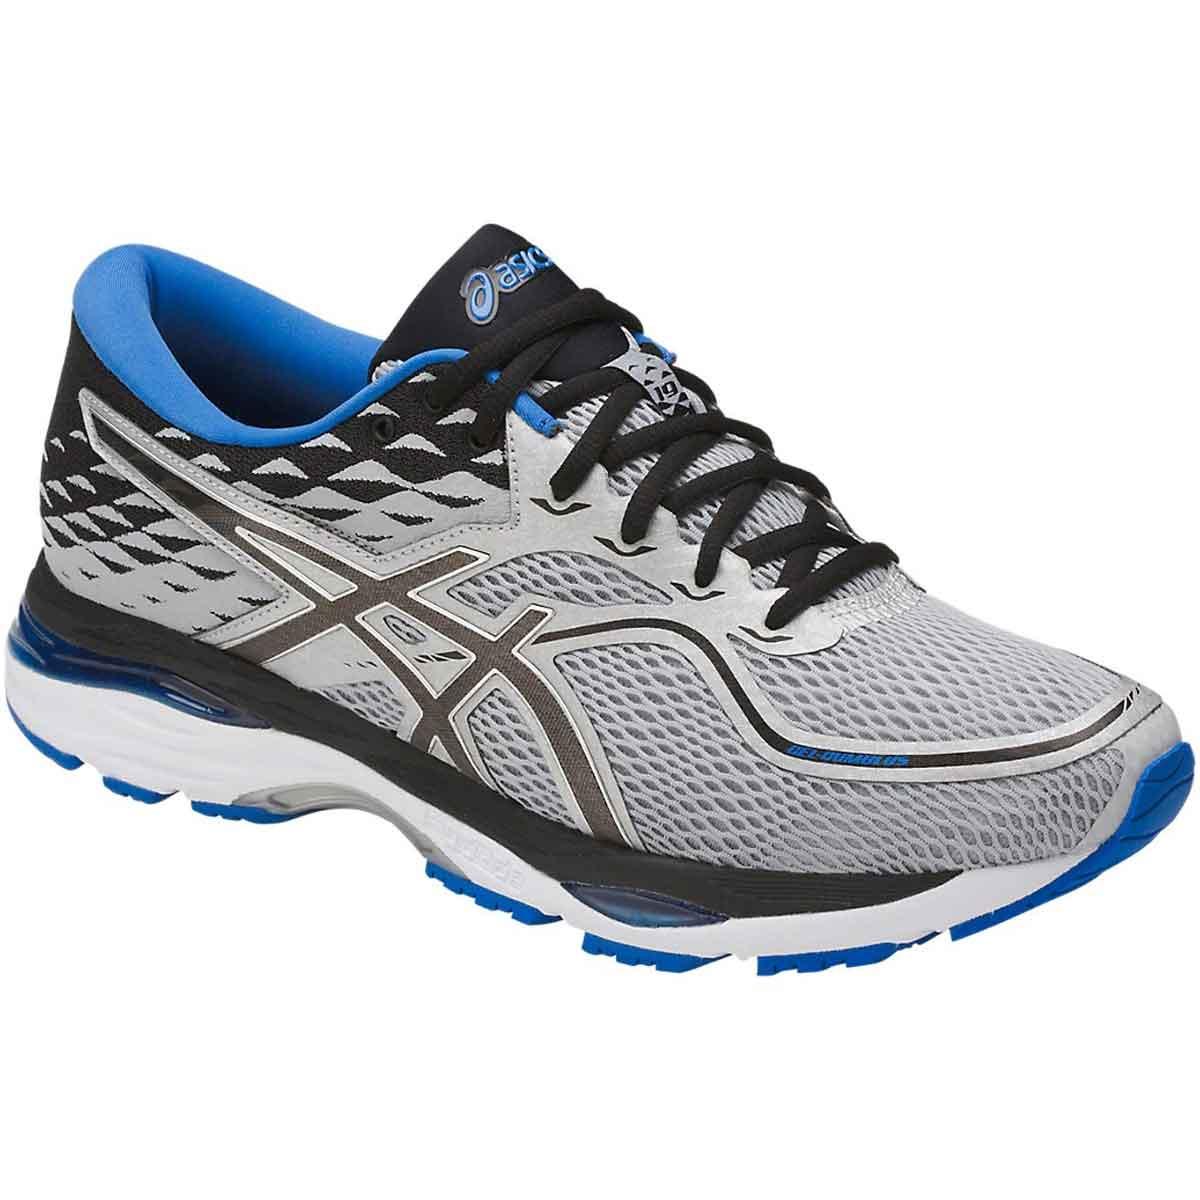 Buy Asics Gel Cumulus 19 Running Shoes (Grey/Black/Blue) Online India